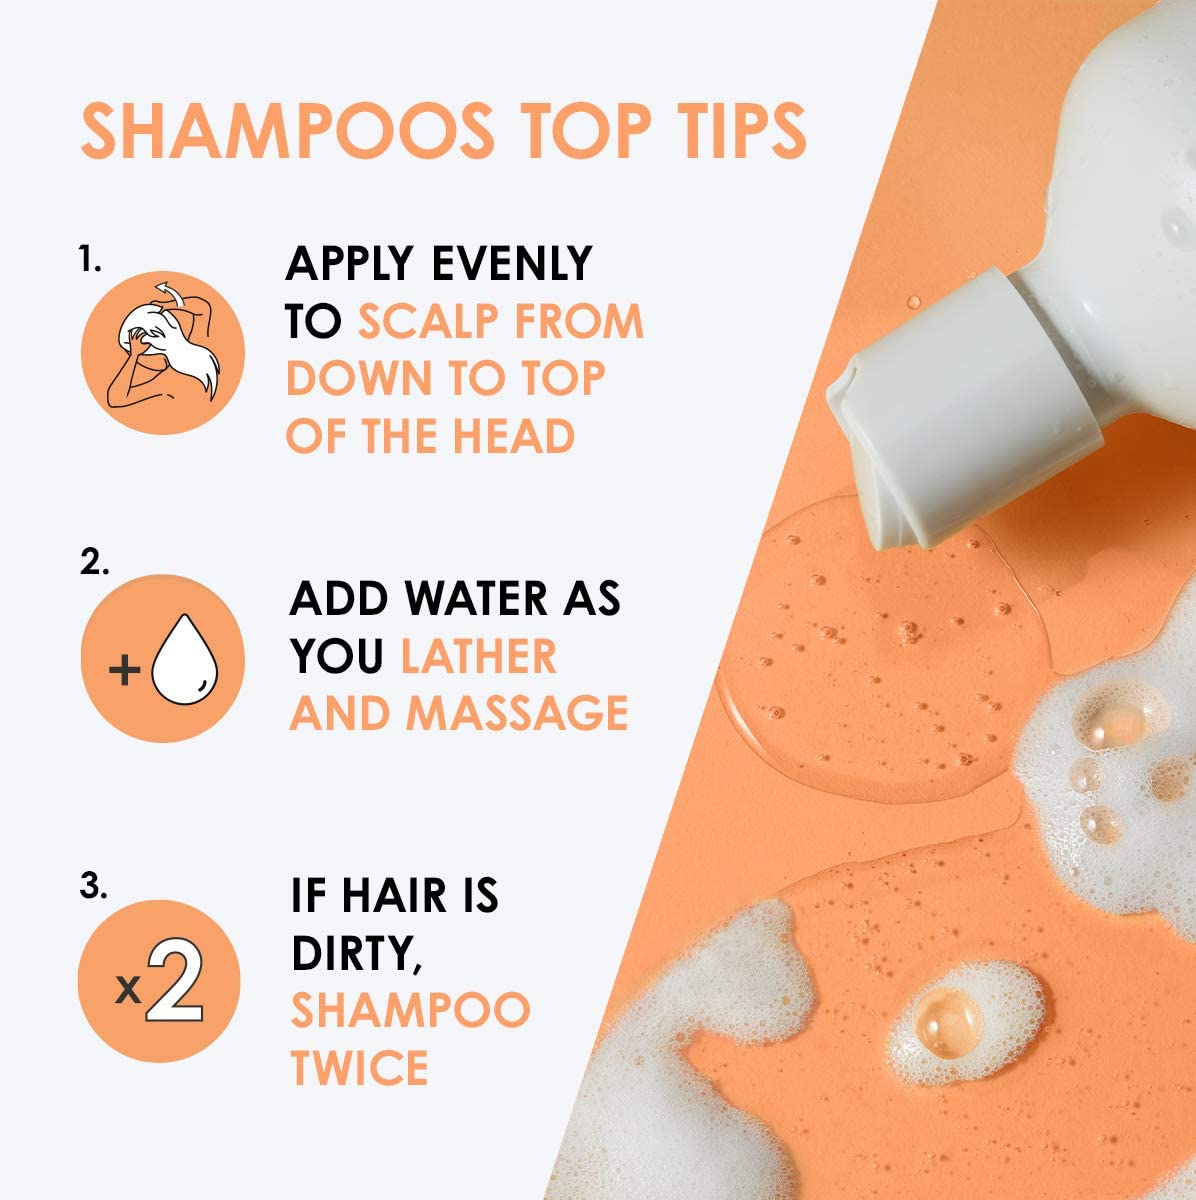 WeDo/Professional Light & Soft Shampoo